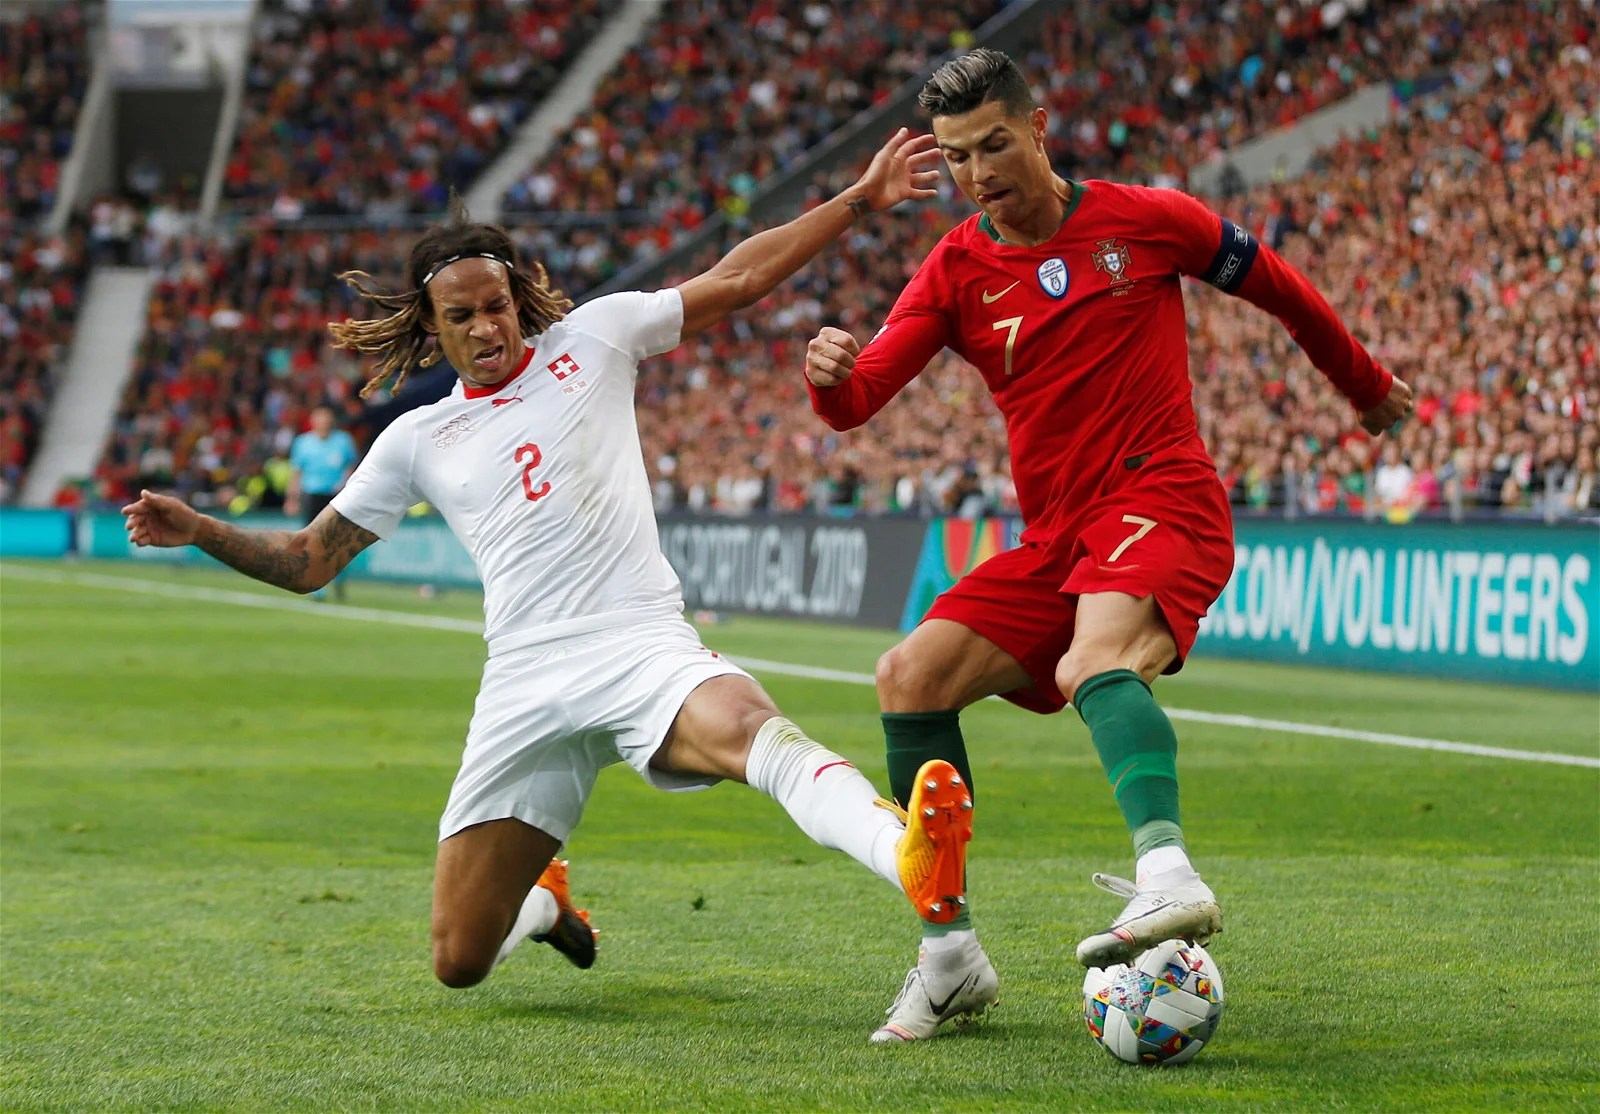 Portugal vs Switzerland live updates